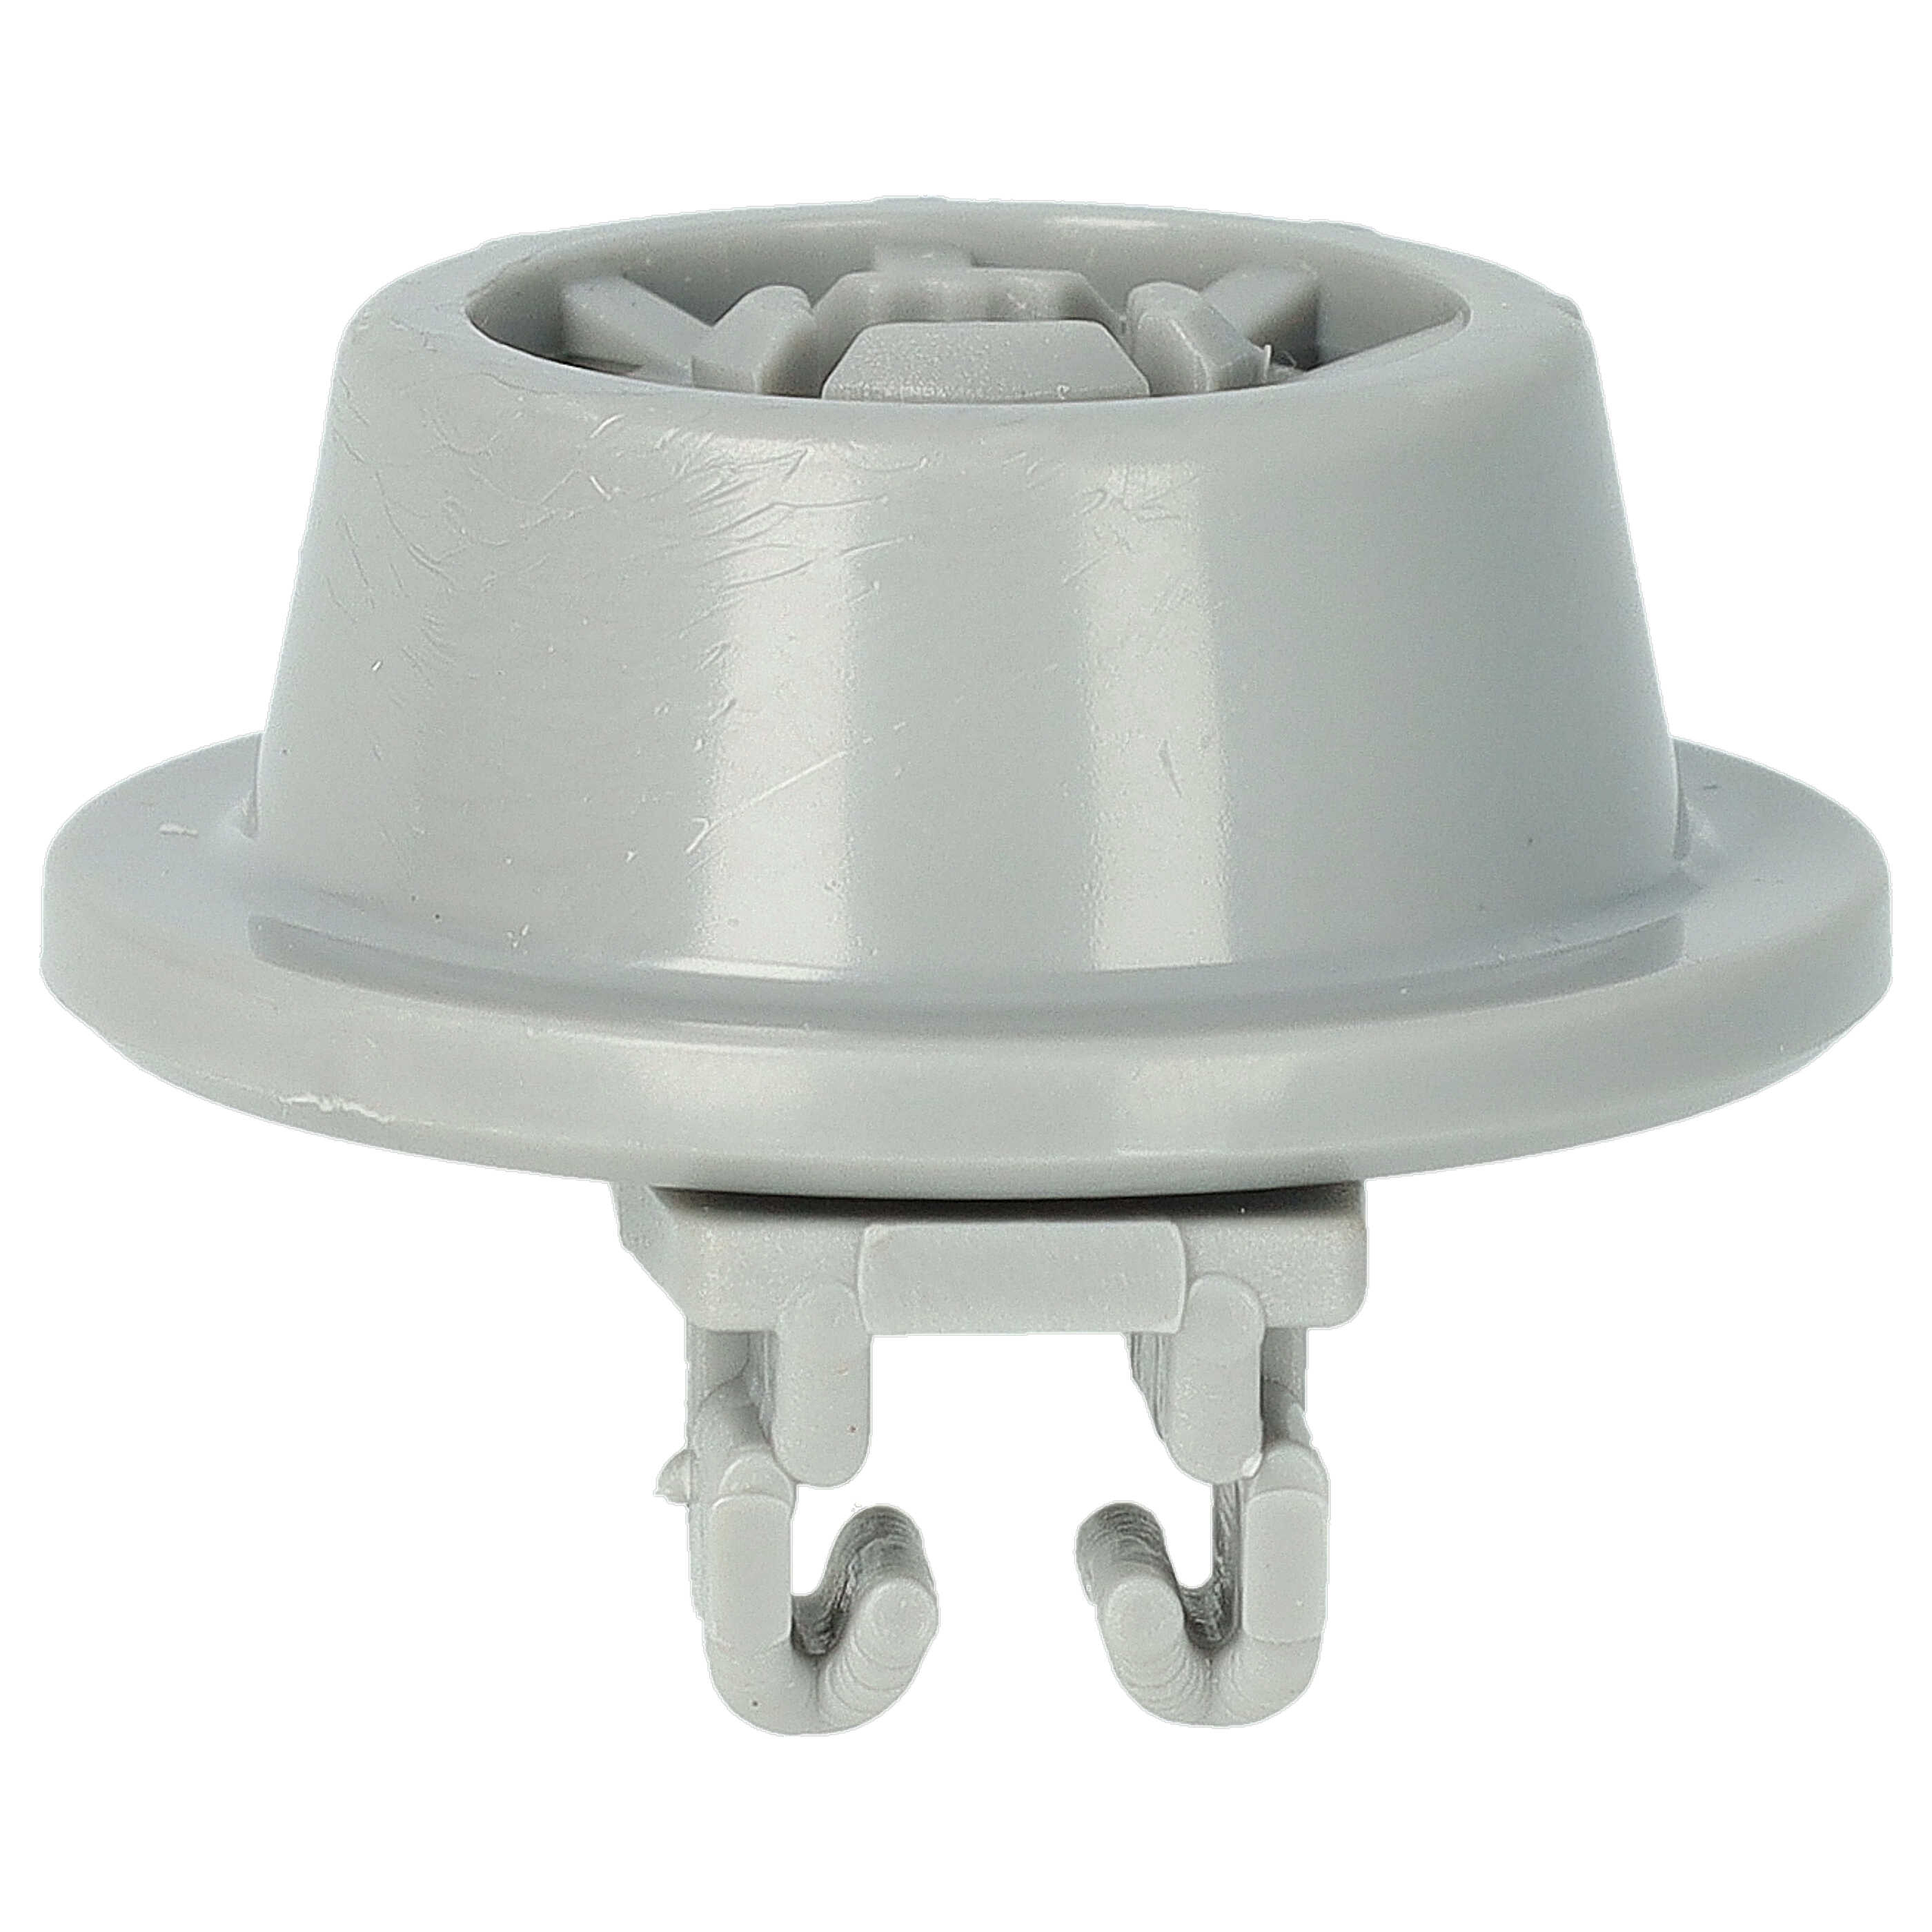 4x Lower Basket Wheel Diameter 35 mm replaces Bosch 00170838, 00183955, 00170834 for Hanseatic Dishwasher